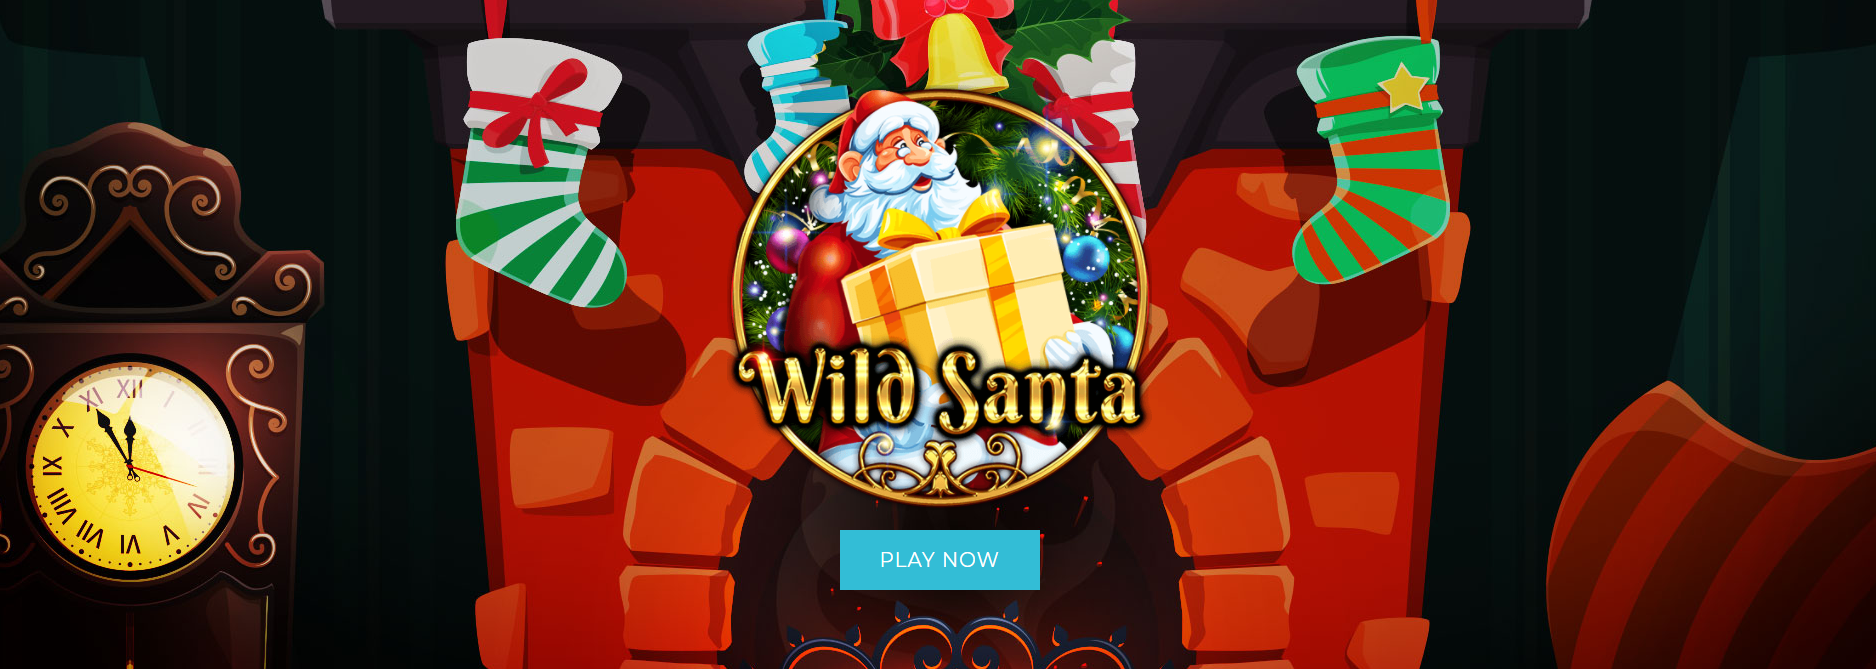 Wild Santa Slot Review